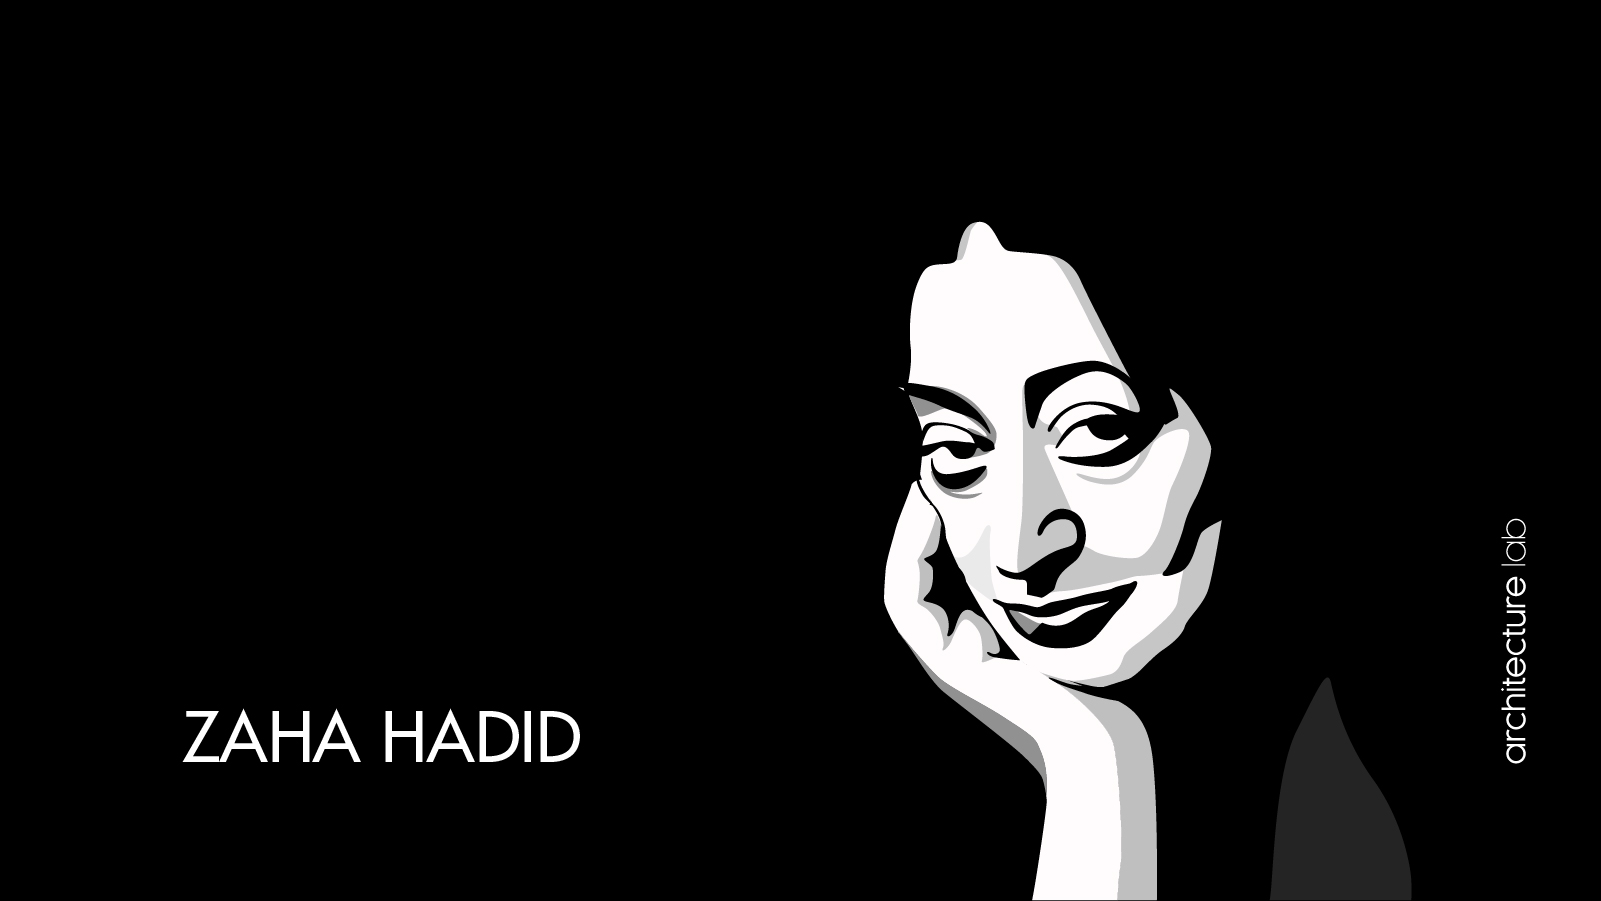 Zaha hadid: biography, works, awards